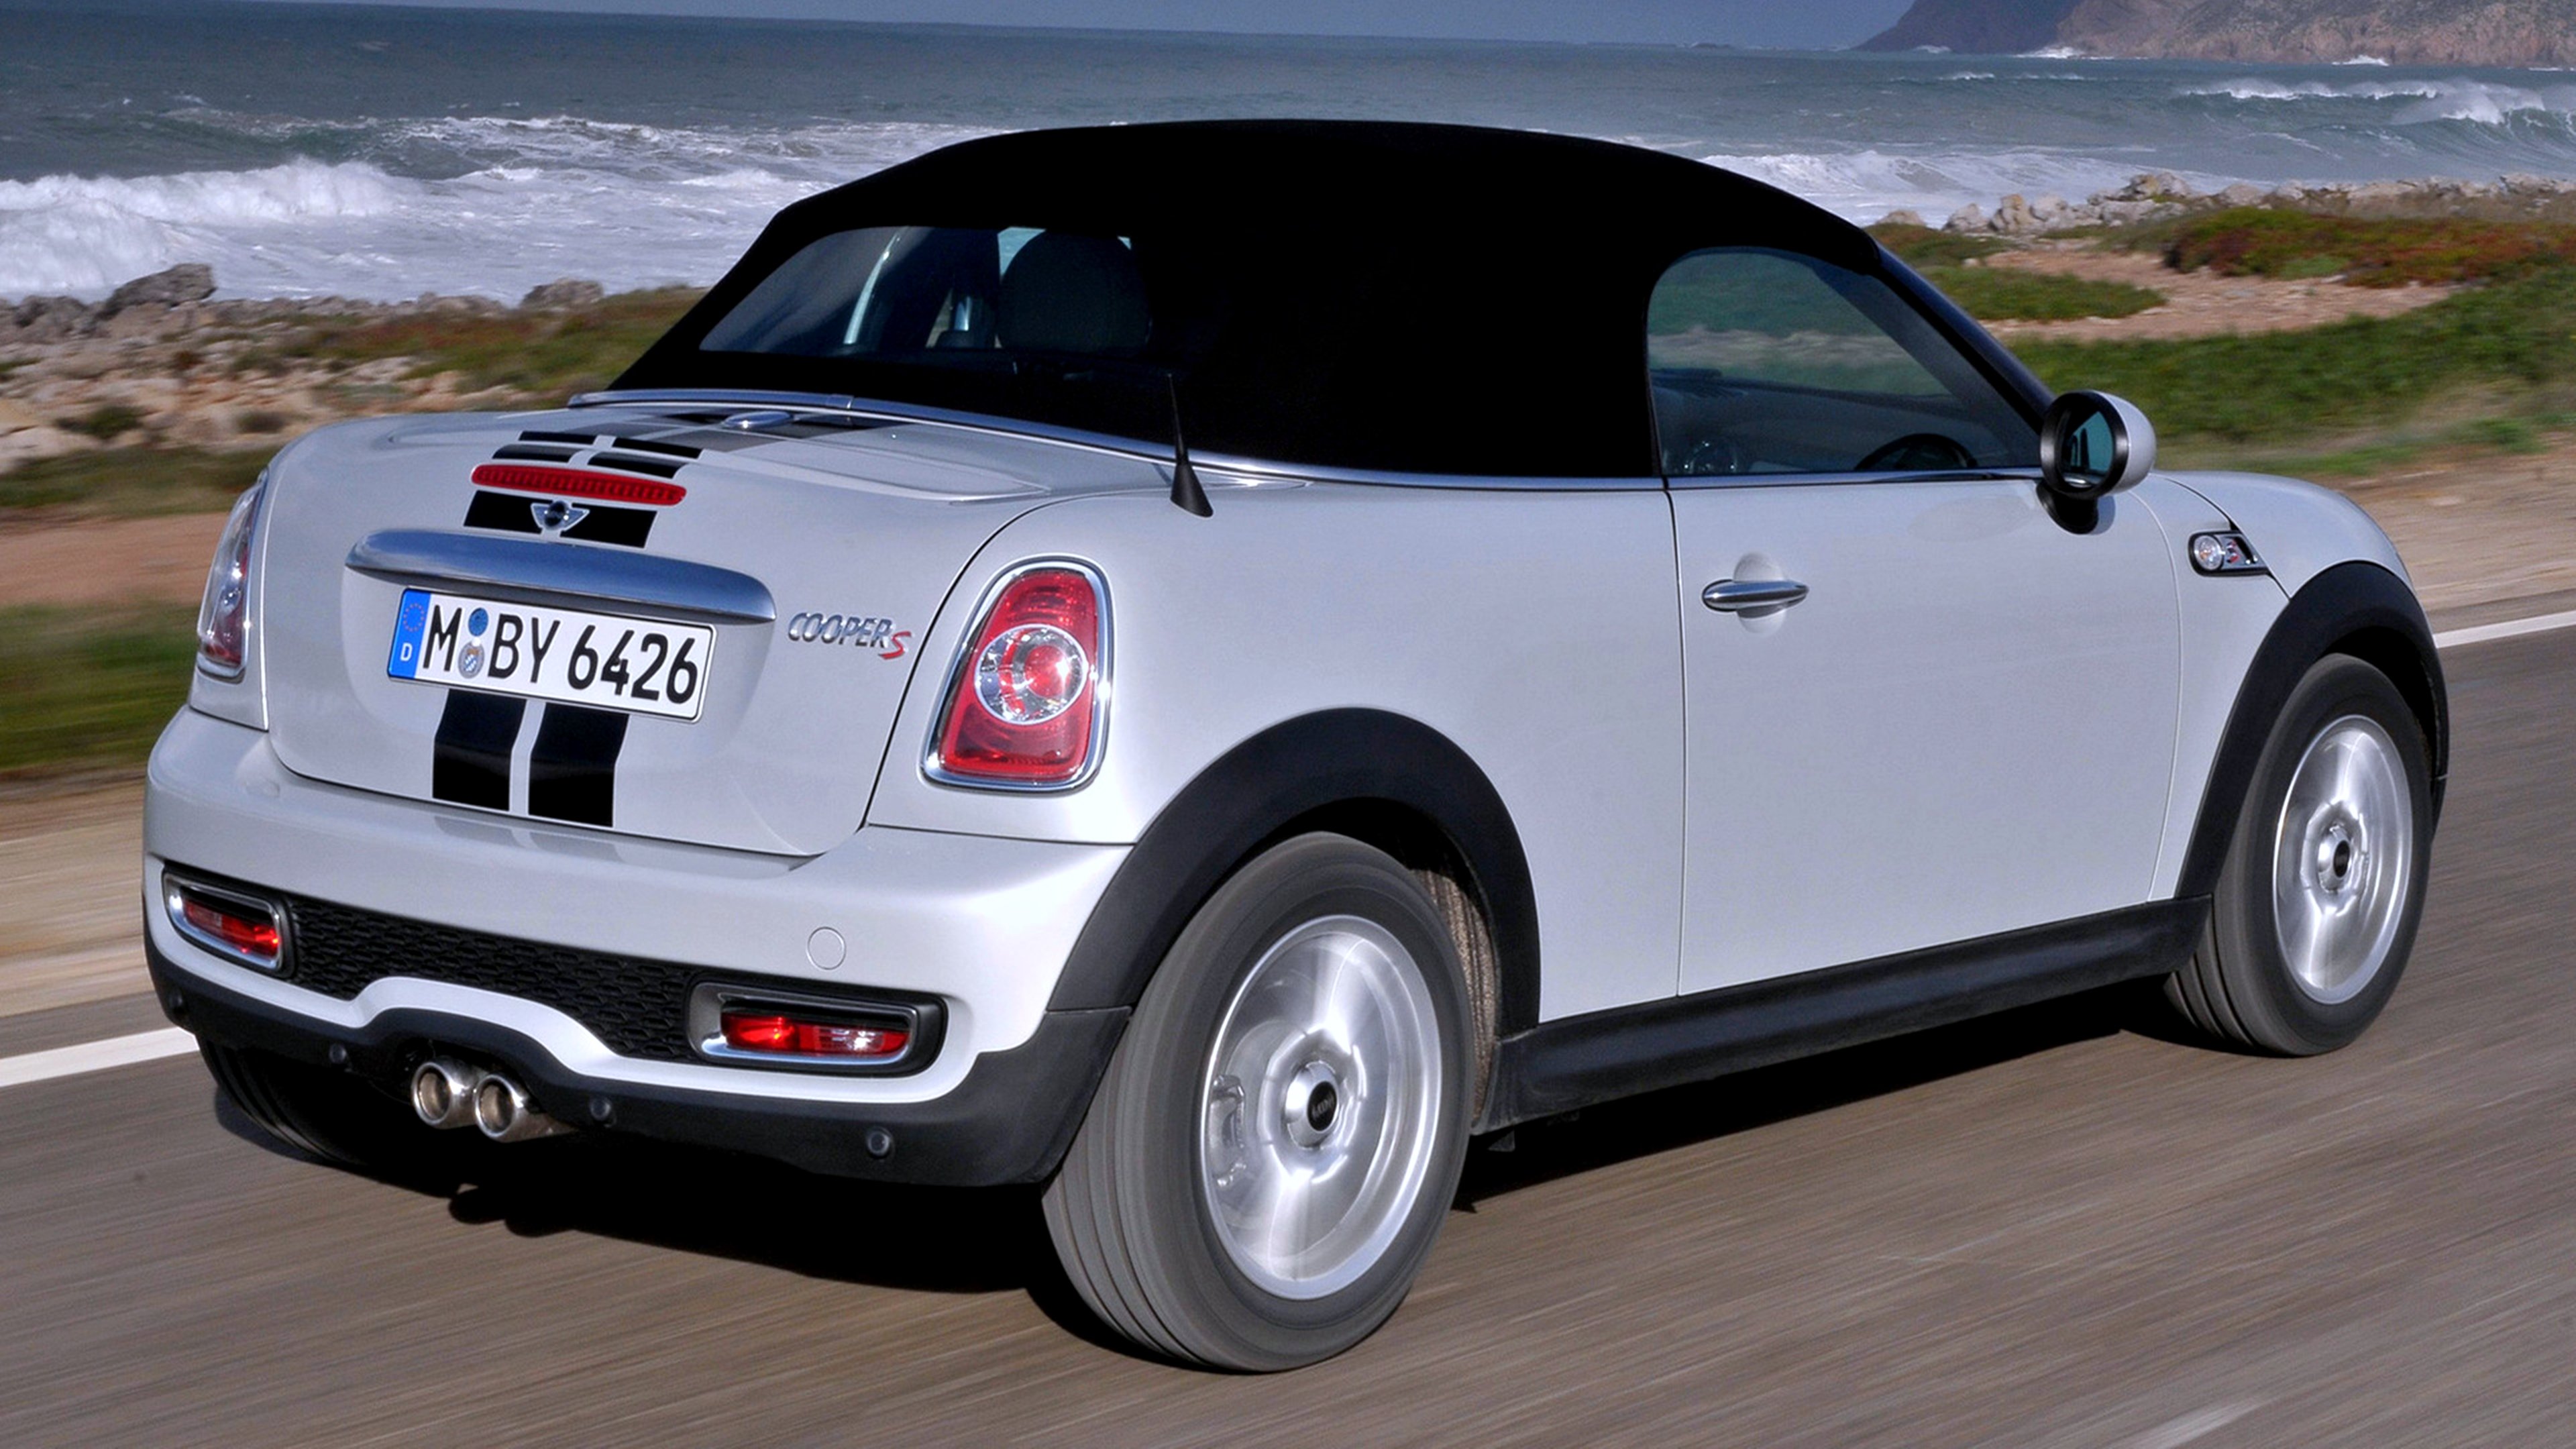 2012, Mini, Cooper, S, Roadster, Sea, Rocks, Beach, White, Roof, Cars, Motors, Auto, Speed, Landscape Wallpaper